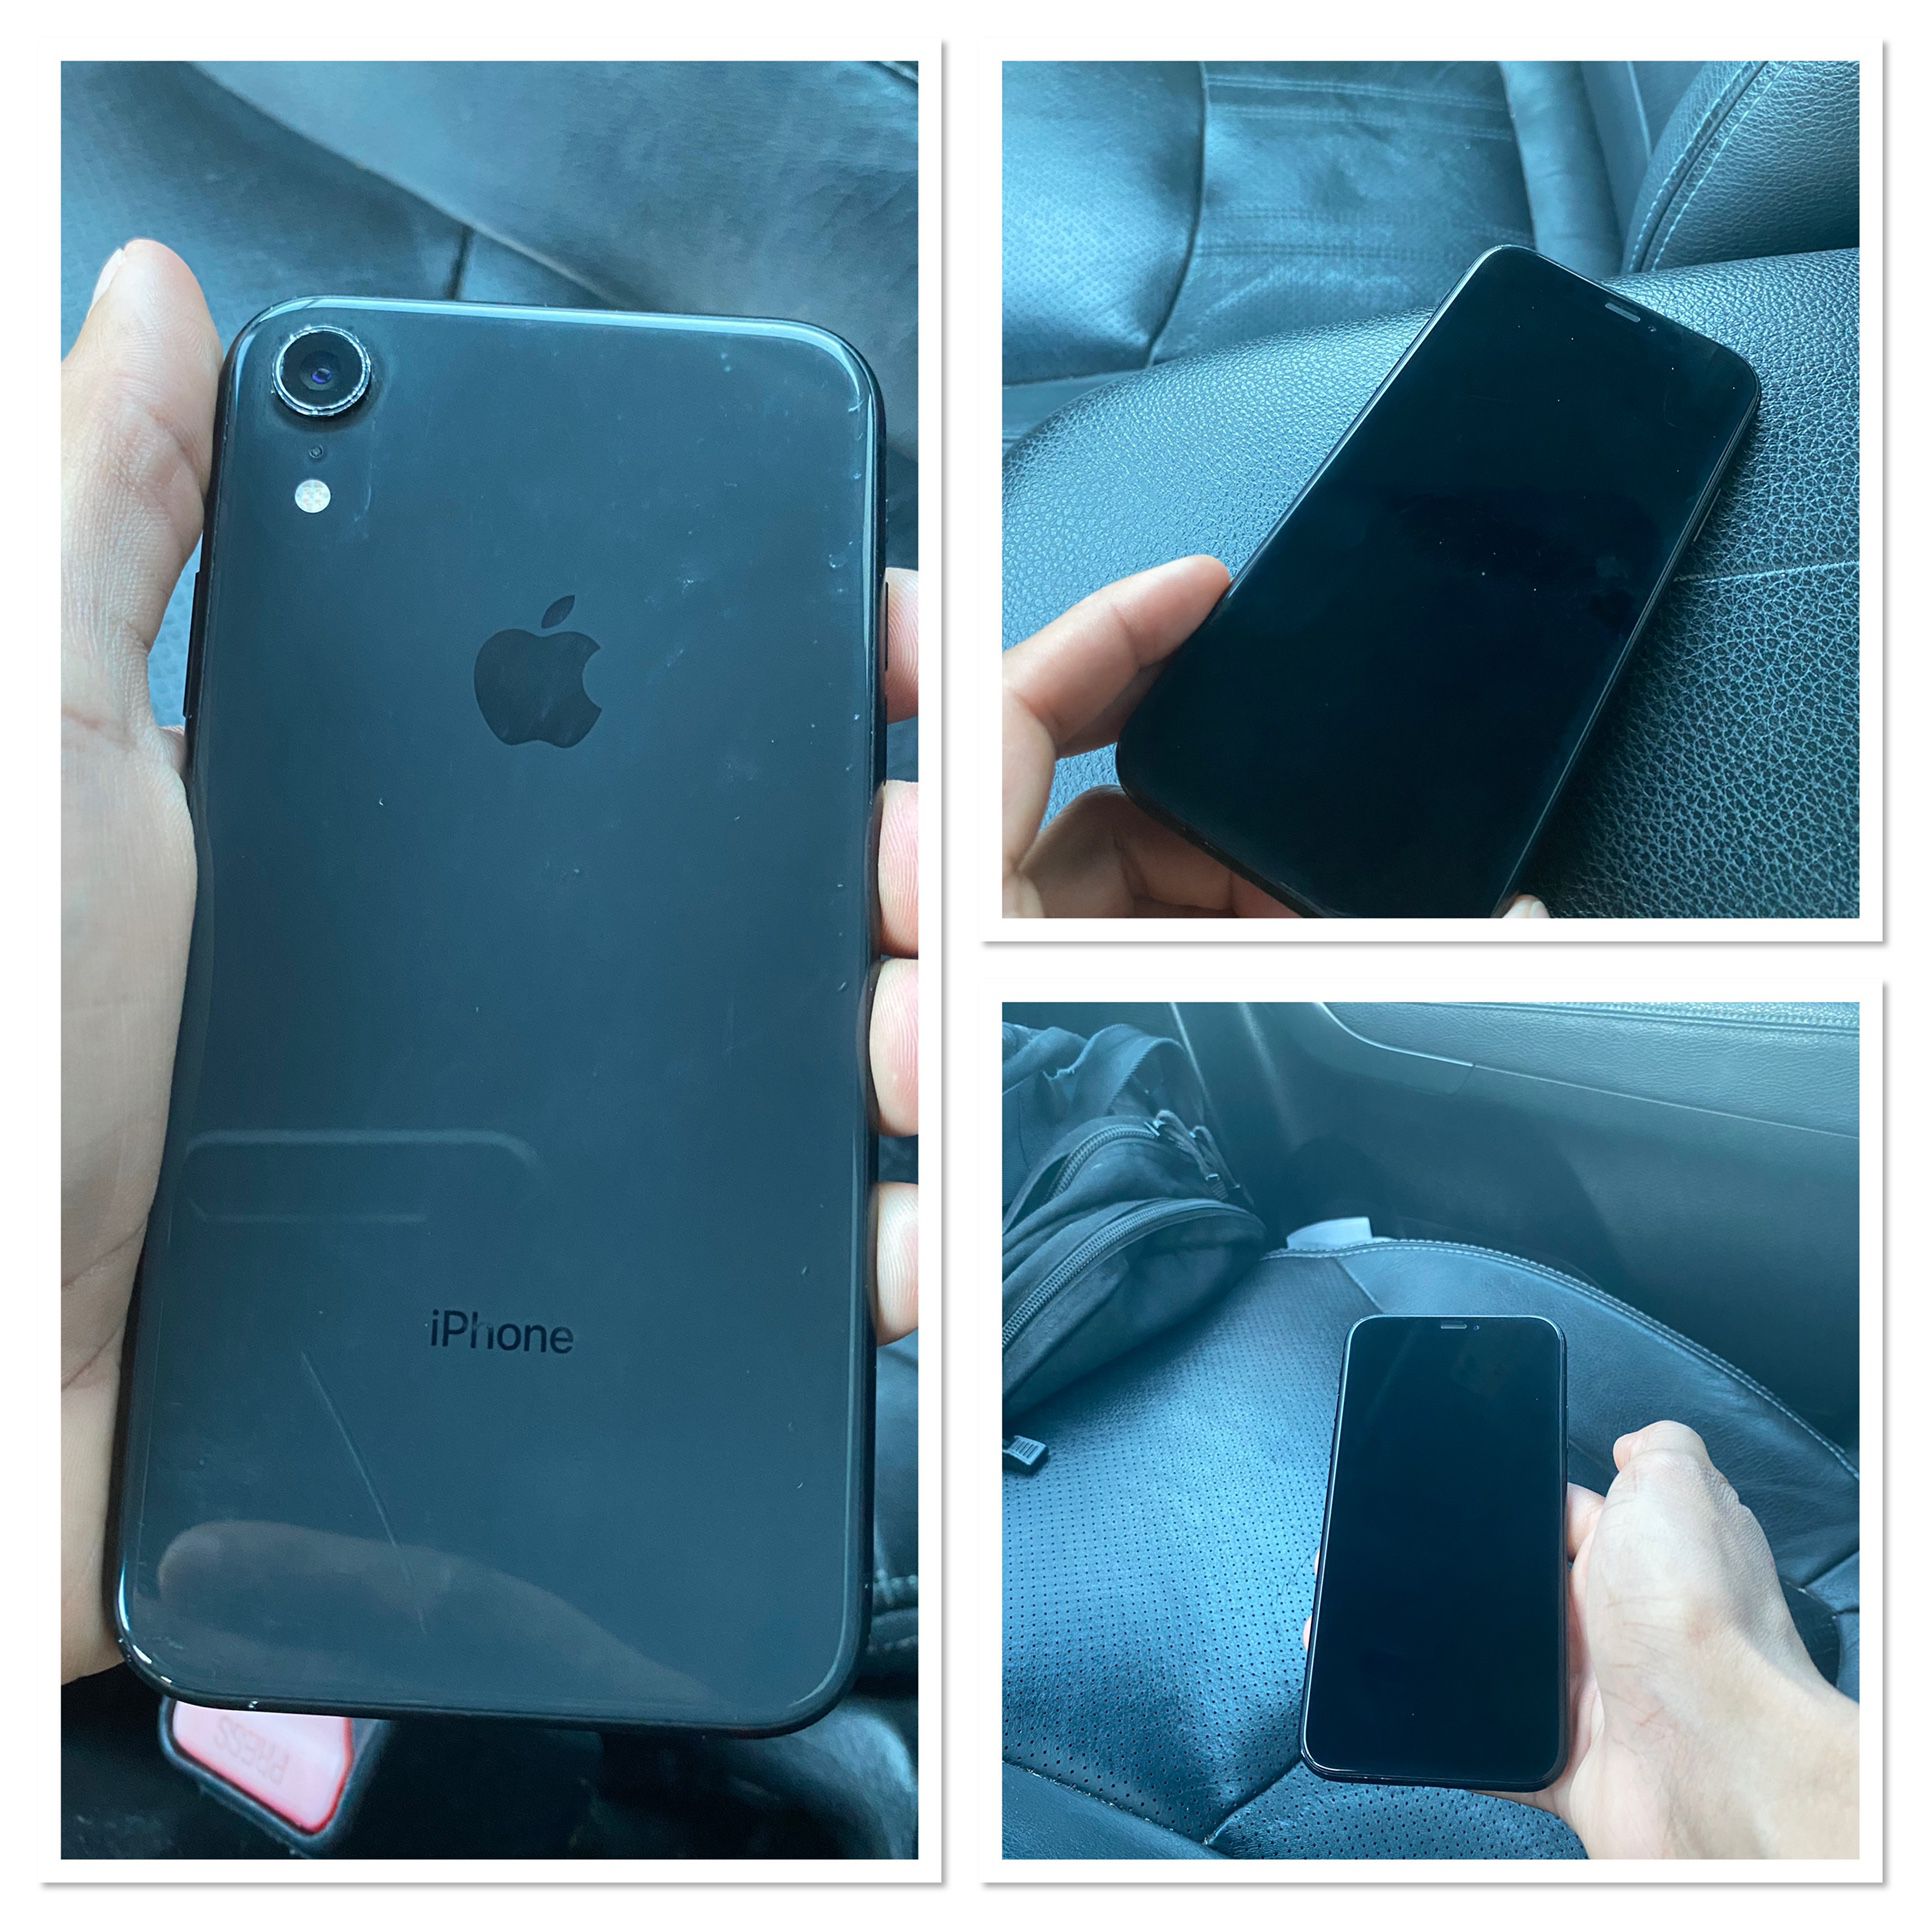 IPhone XR (Black)